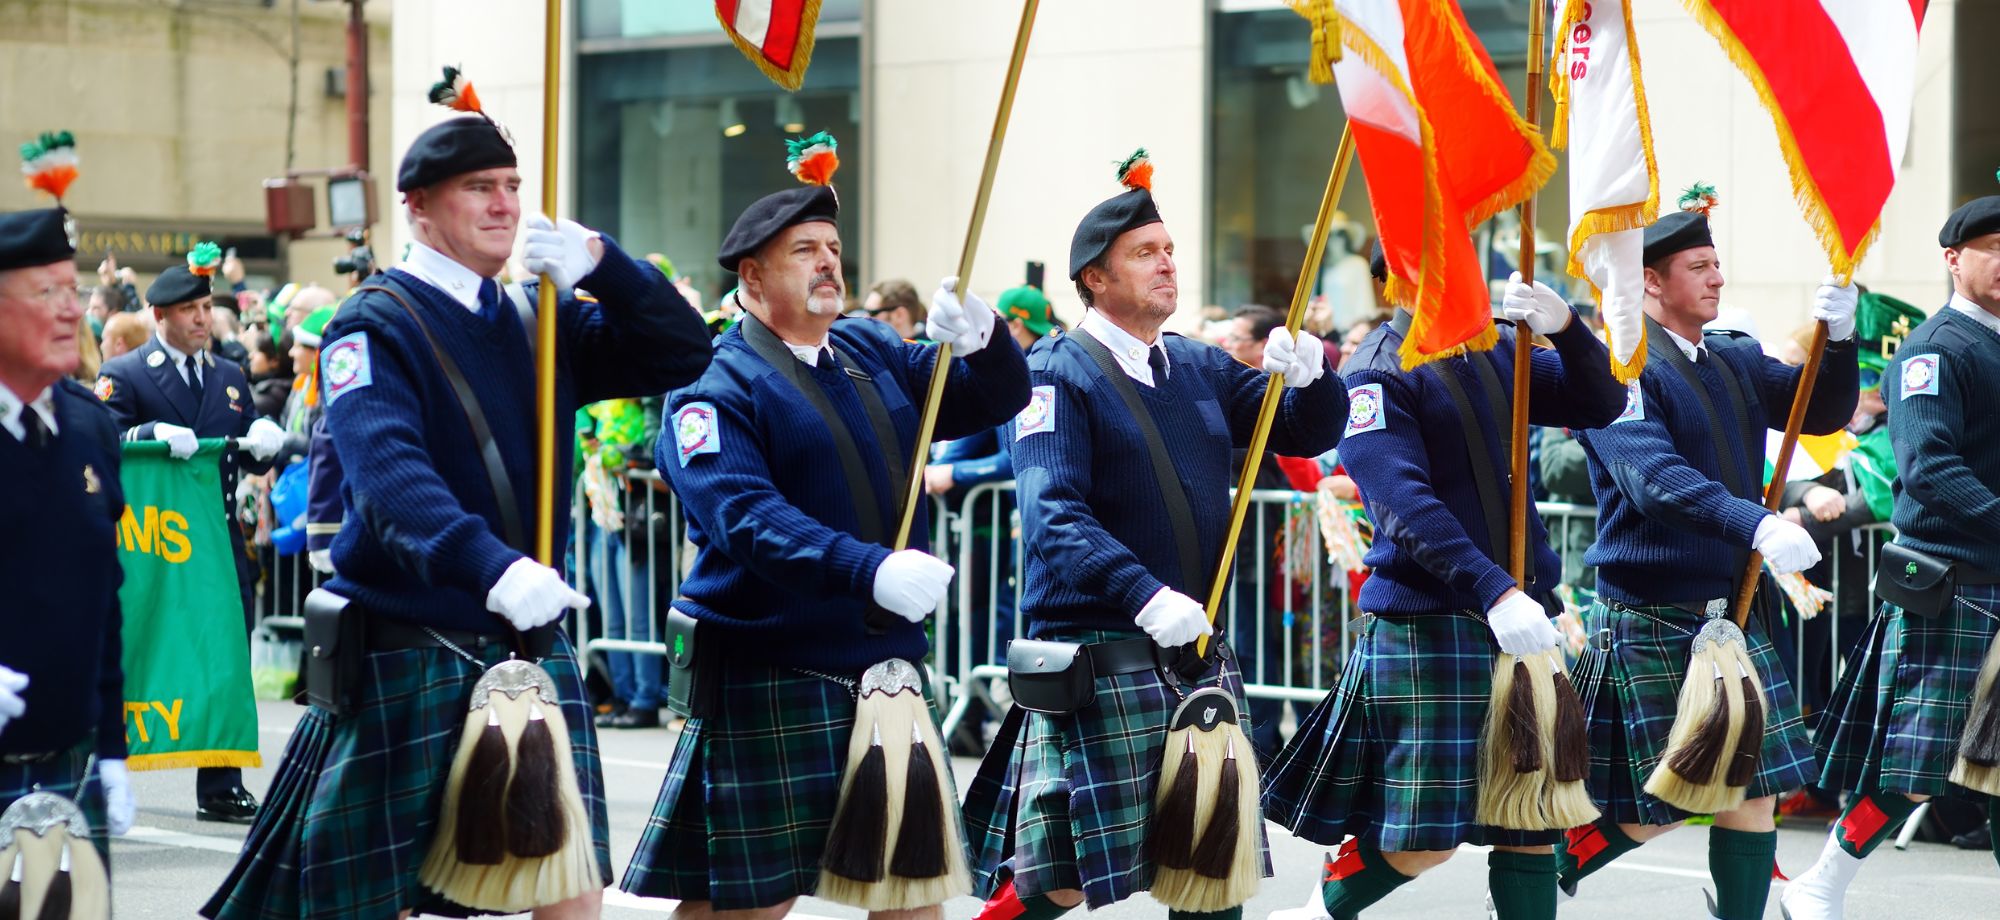 Boston Hotels Near the St. Patrick’s Day Parade